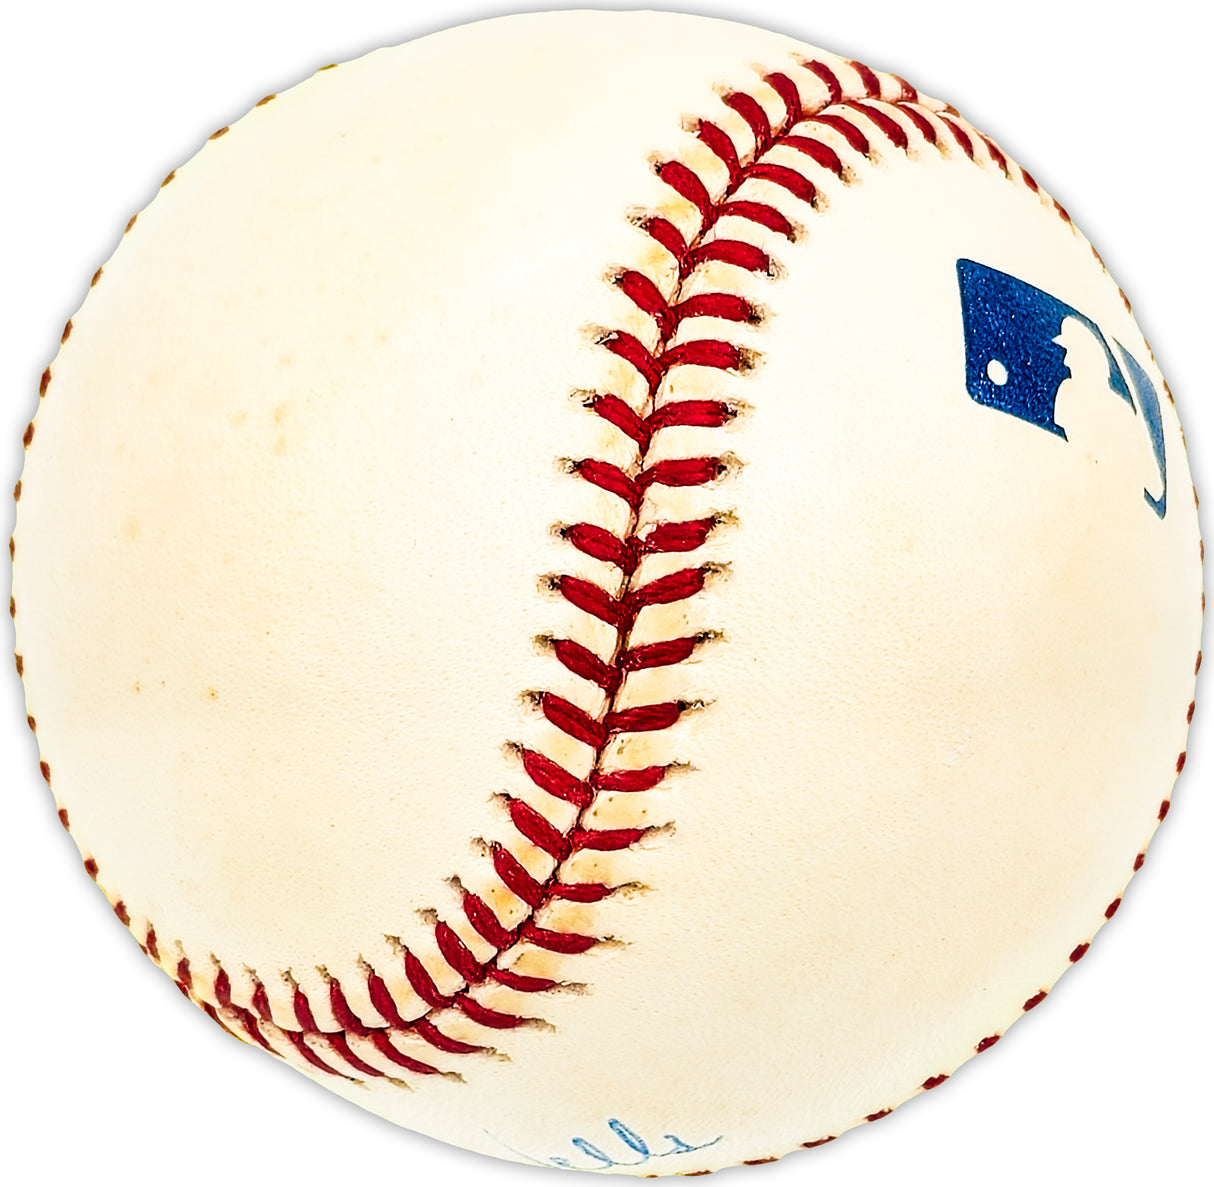 David Wells Autographed Official MLB Baseball Yankees, Blue Jays Beckett BAS QR #BM25075